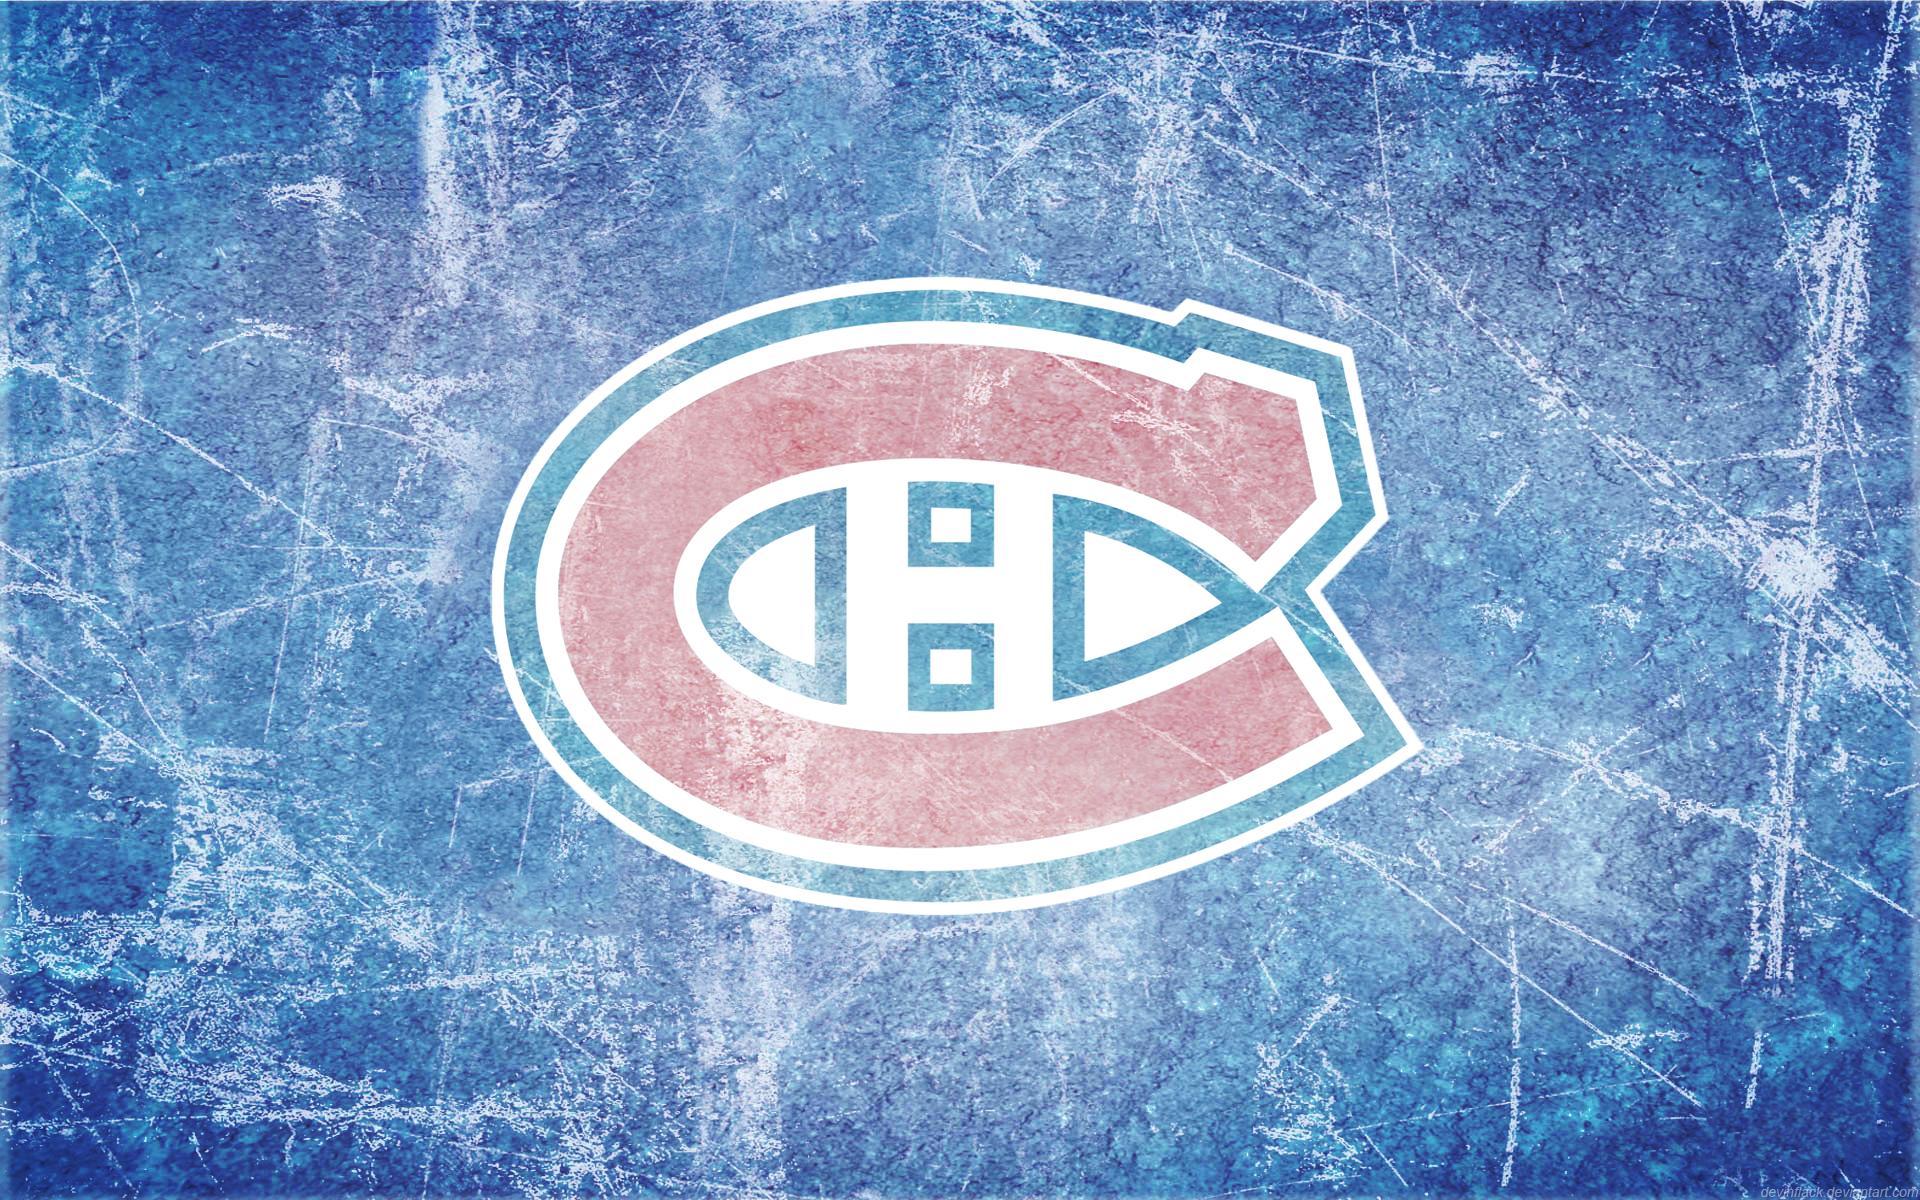 Montreal Canadiens Wallpaper, 46 Montreal Canadiens Computer Wallpaper